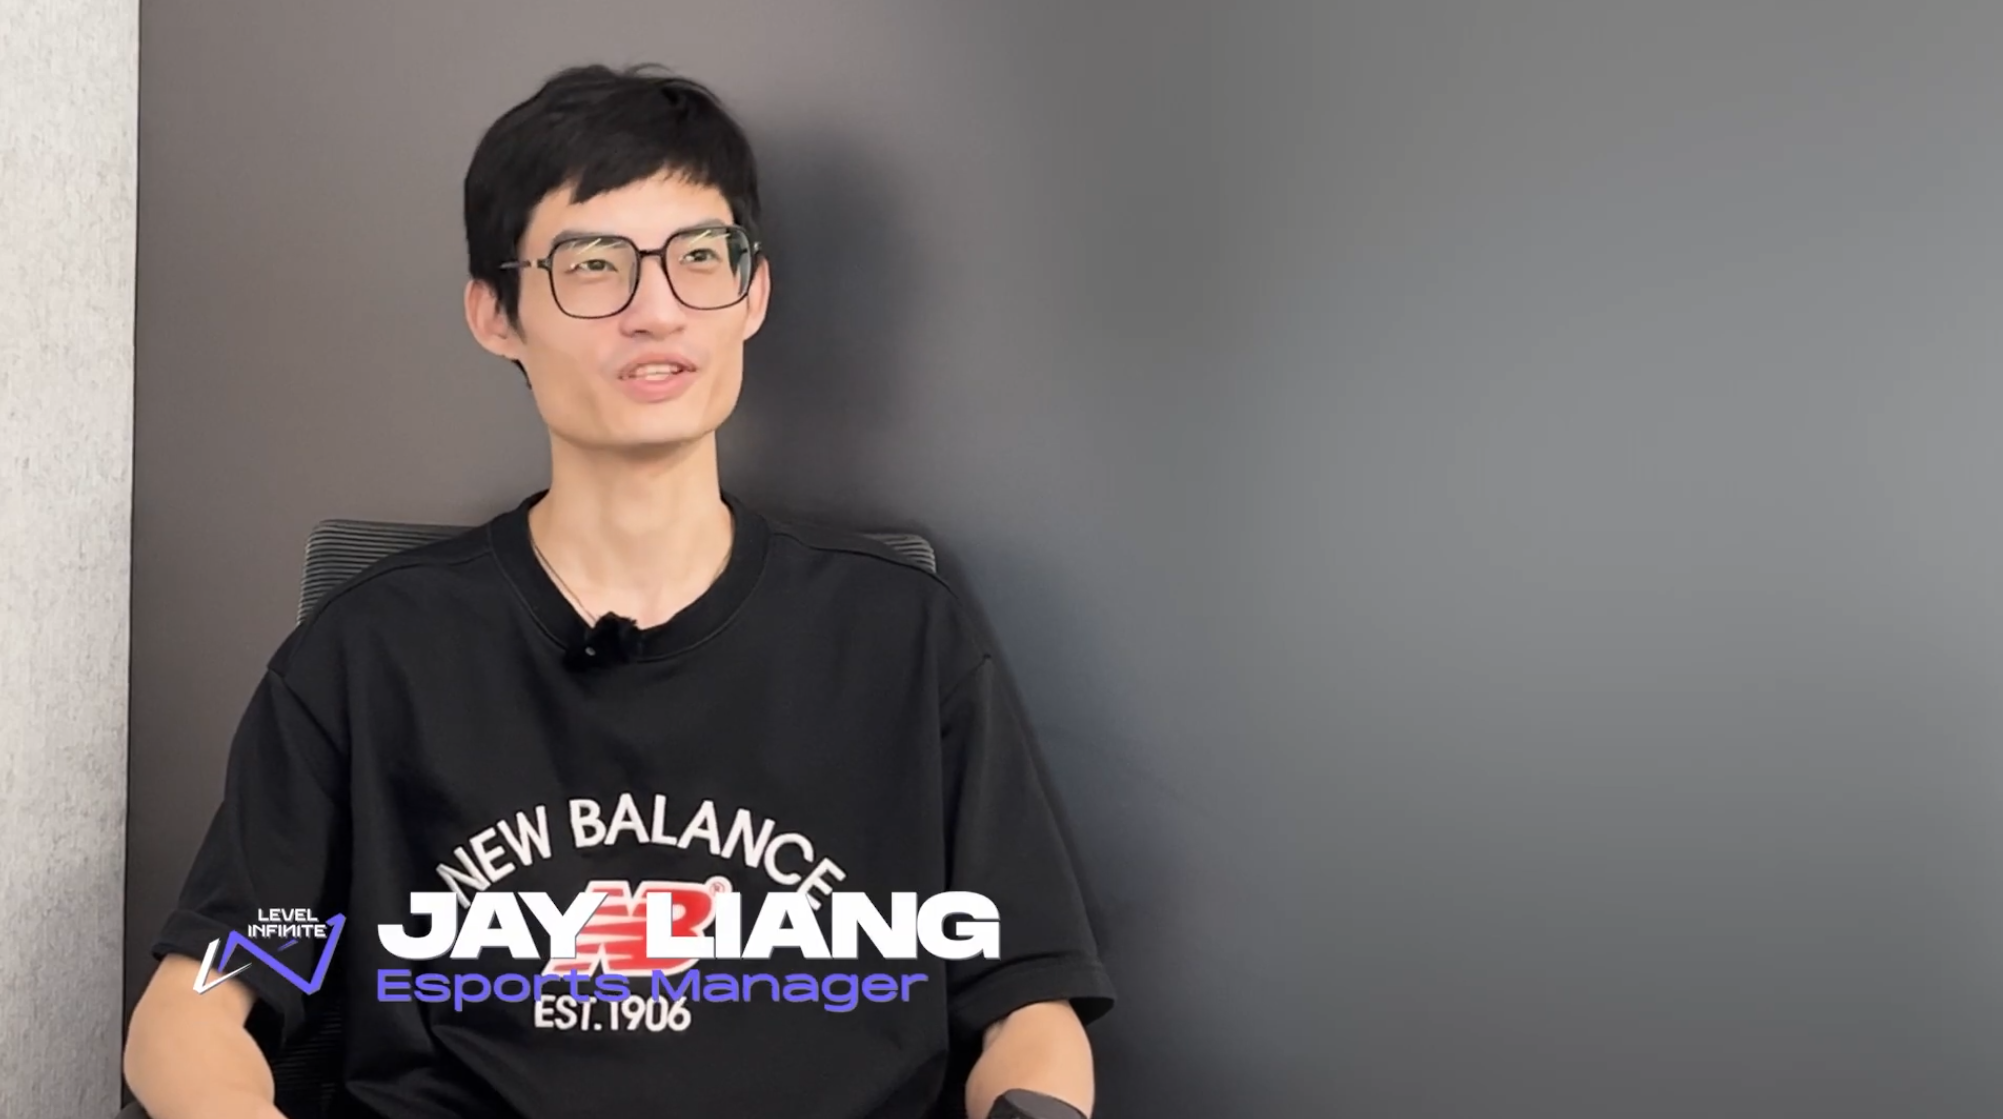 Jay Liang Video Screenshot Giving Advice on Esports Careers